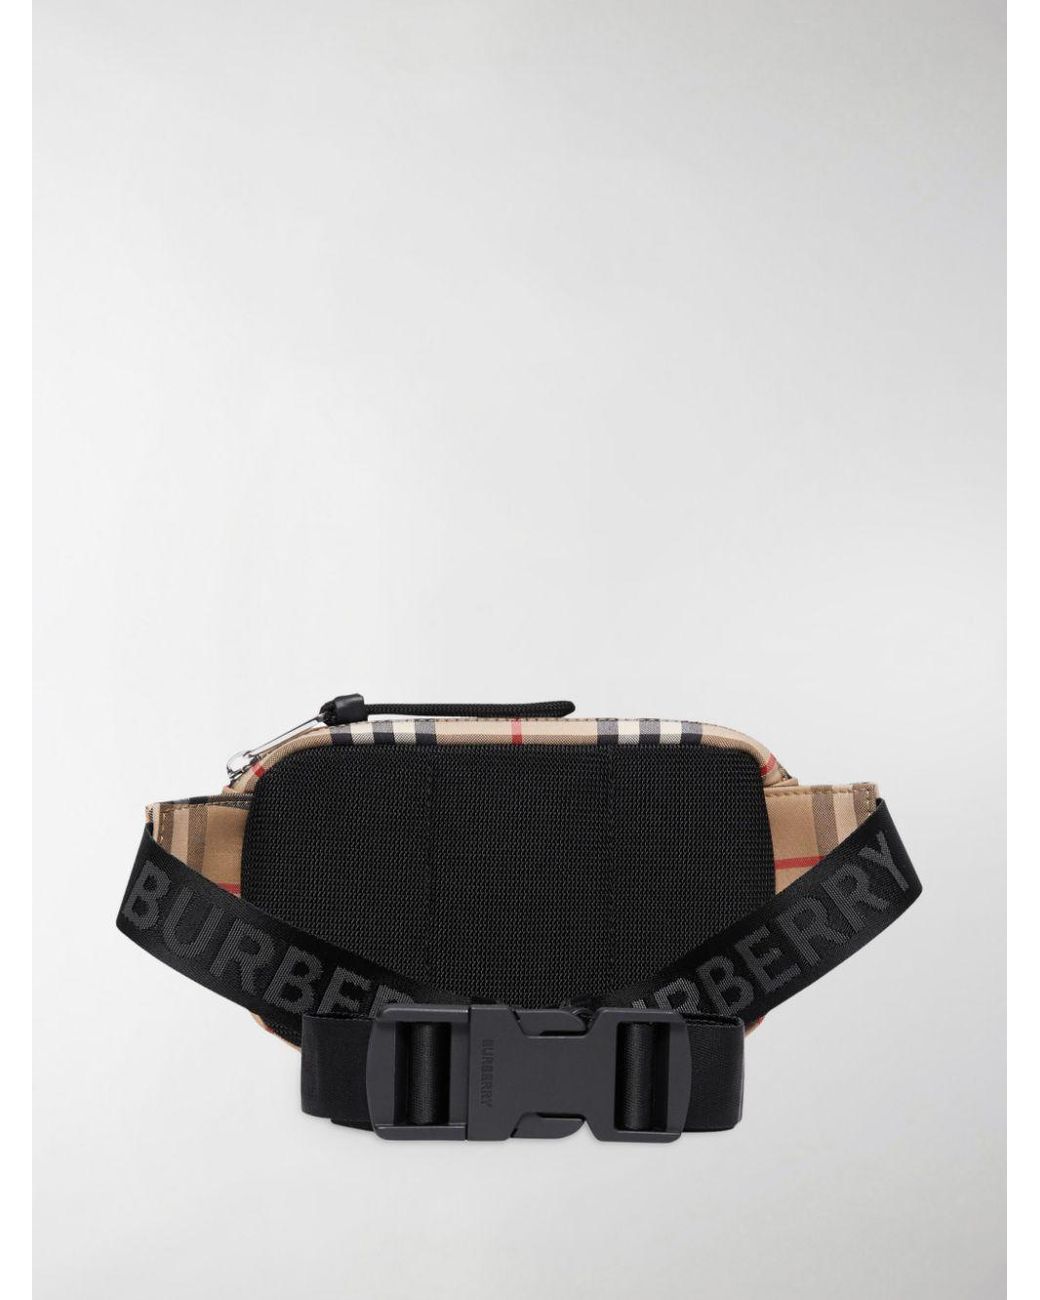 Vintage Burberry belt bag, Nova check - Ruby Lane